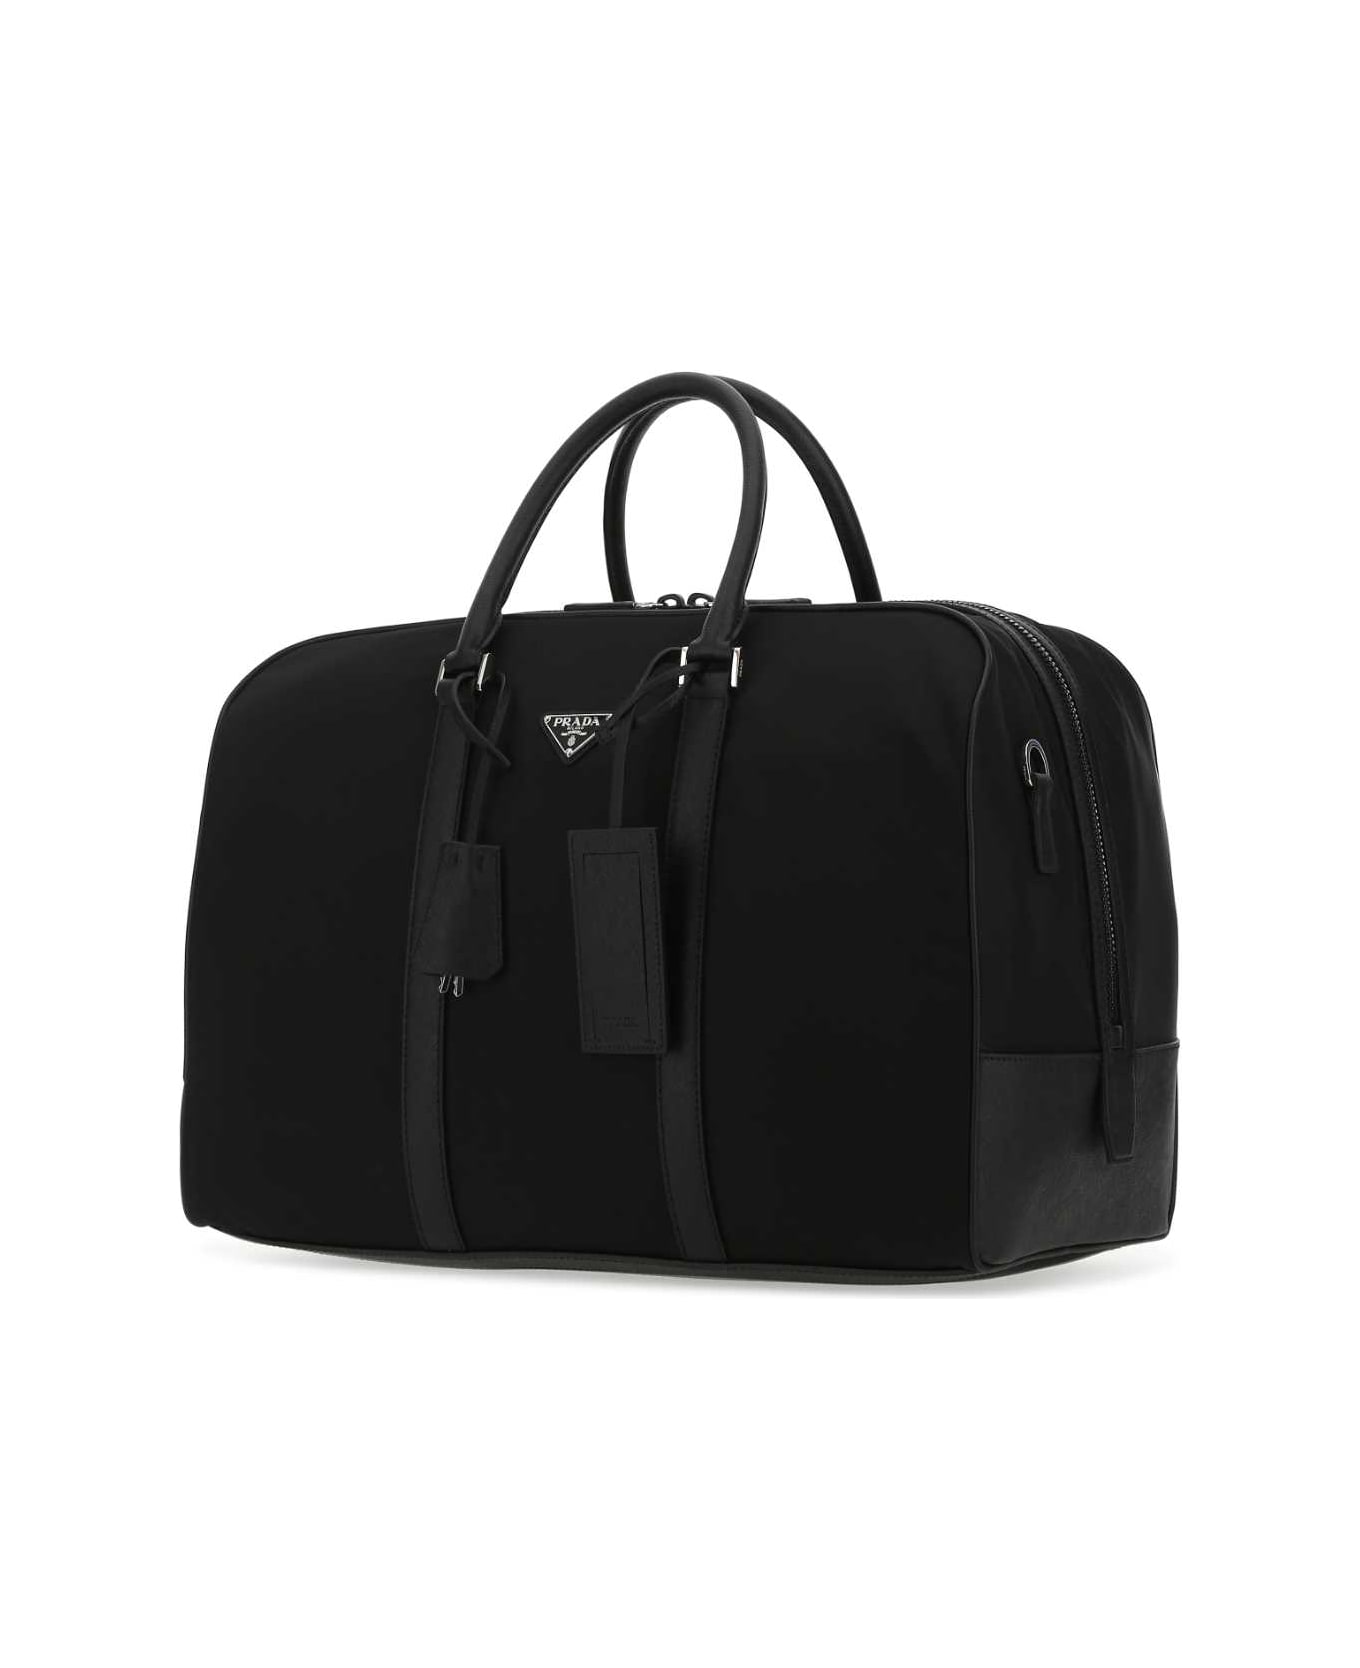 Prada Black Nylon Travel Bag - F0002